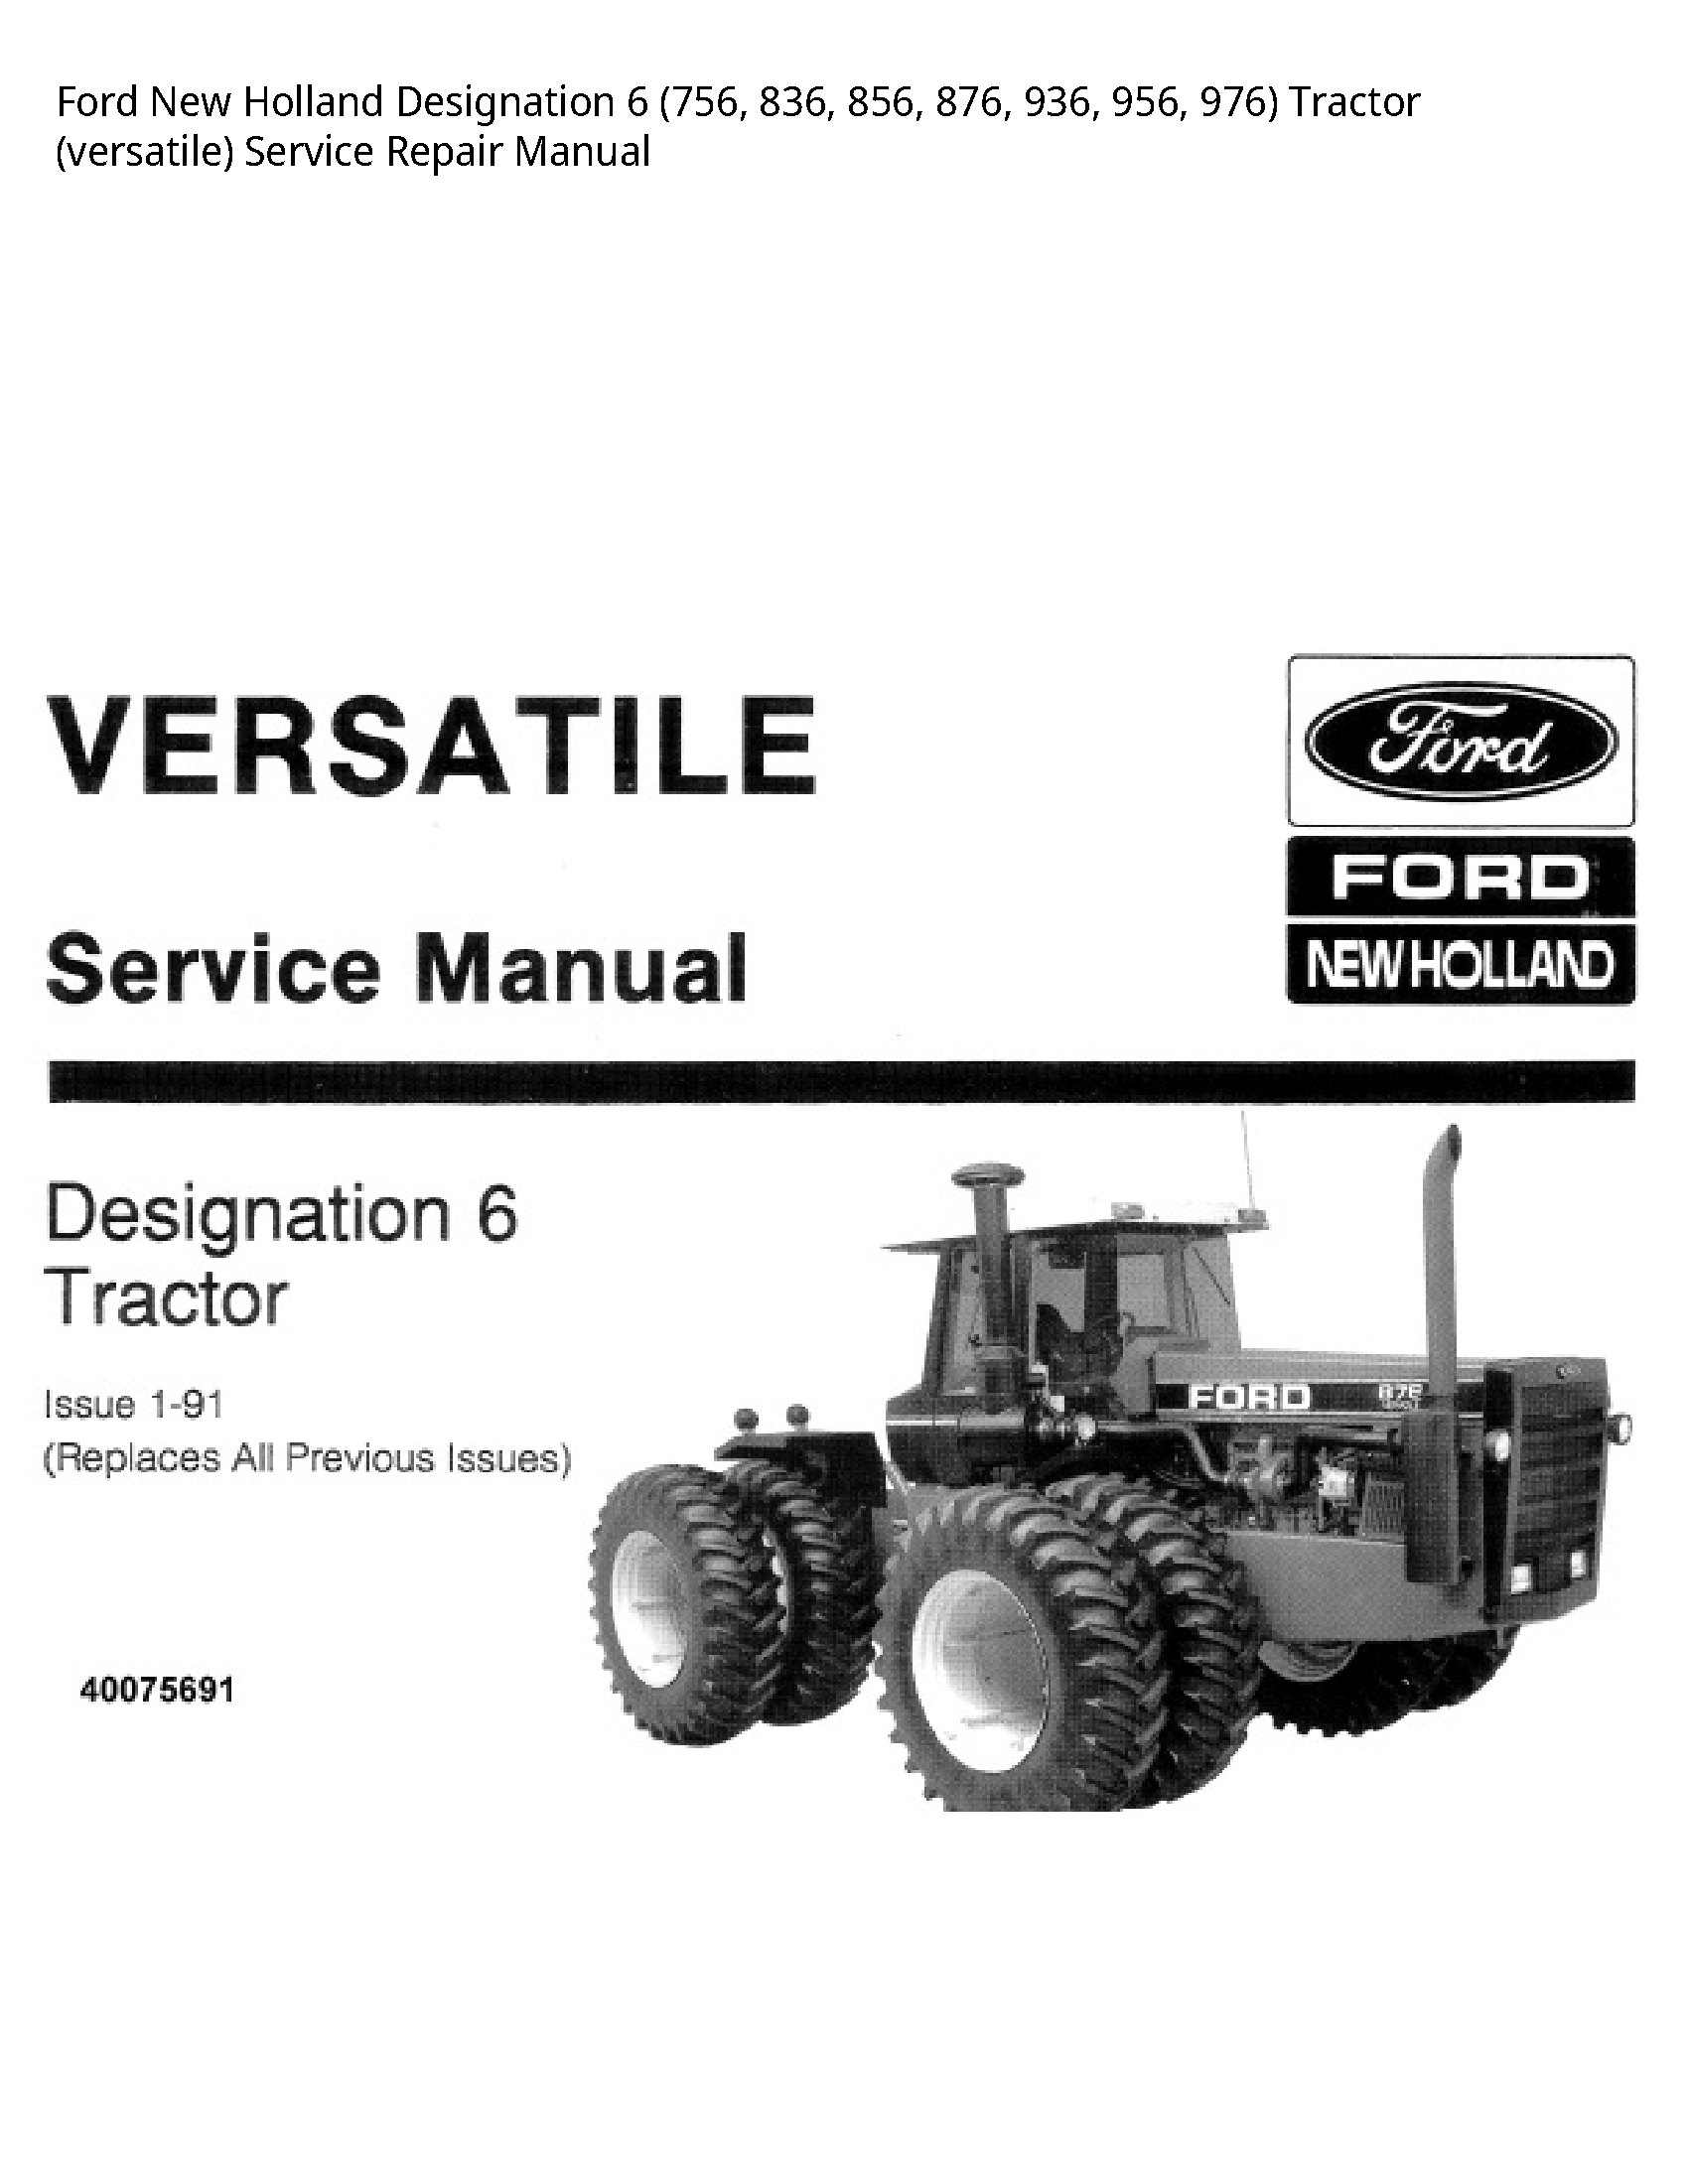  6 Designation Tractor (versatile) manual